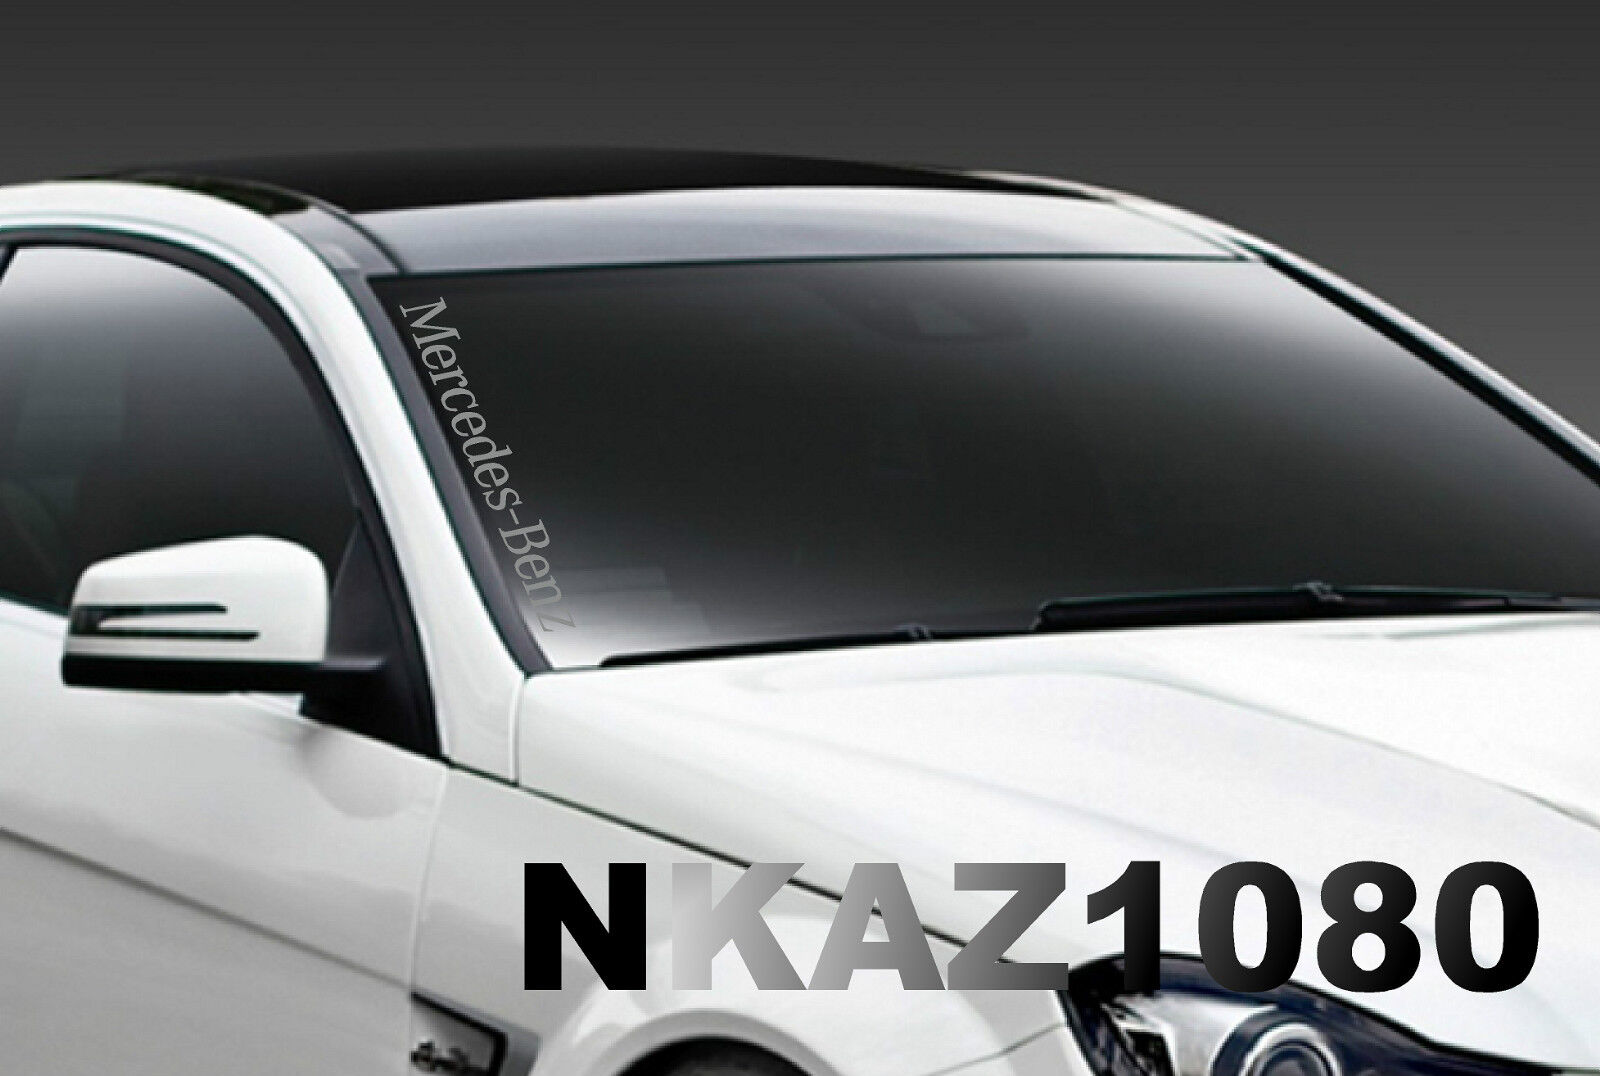 Mercedes Benz windshield Vinyl Decal Sport car Racing sticker emblem logo SILVER